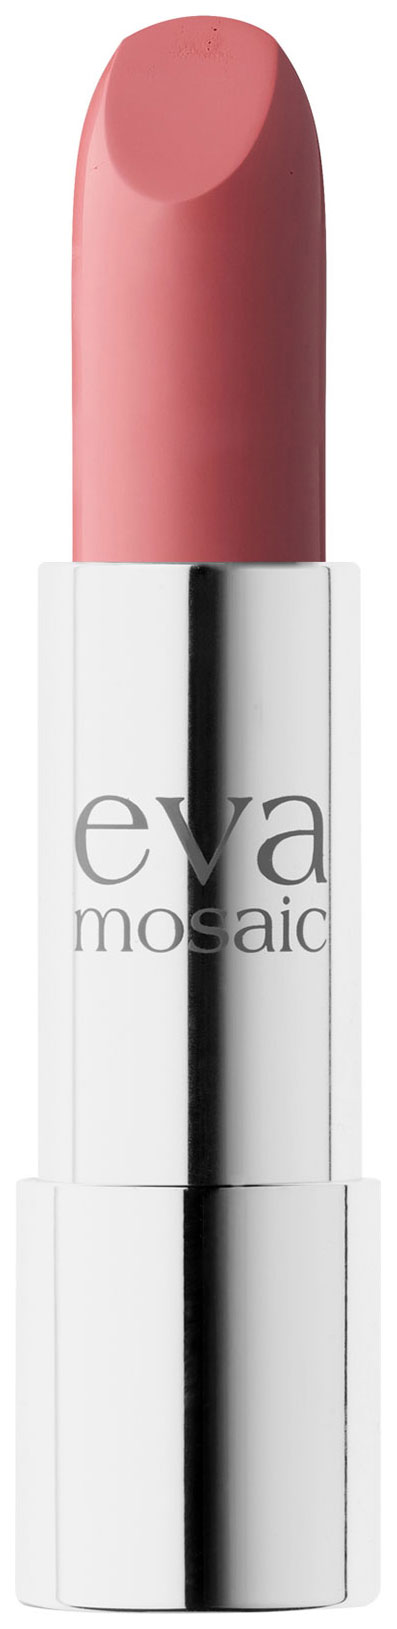 Помада Eva Mosaic Cream Desire 10 4 г помада для бровей bespecial brownie truffle cream